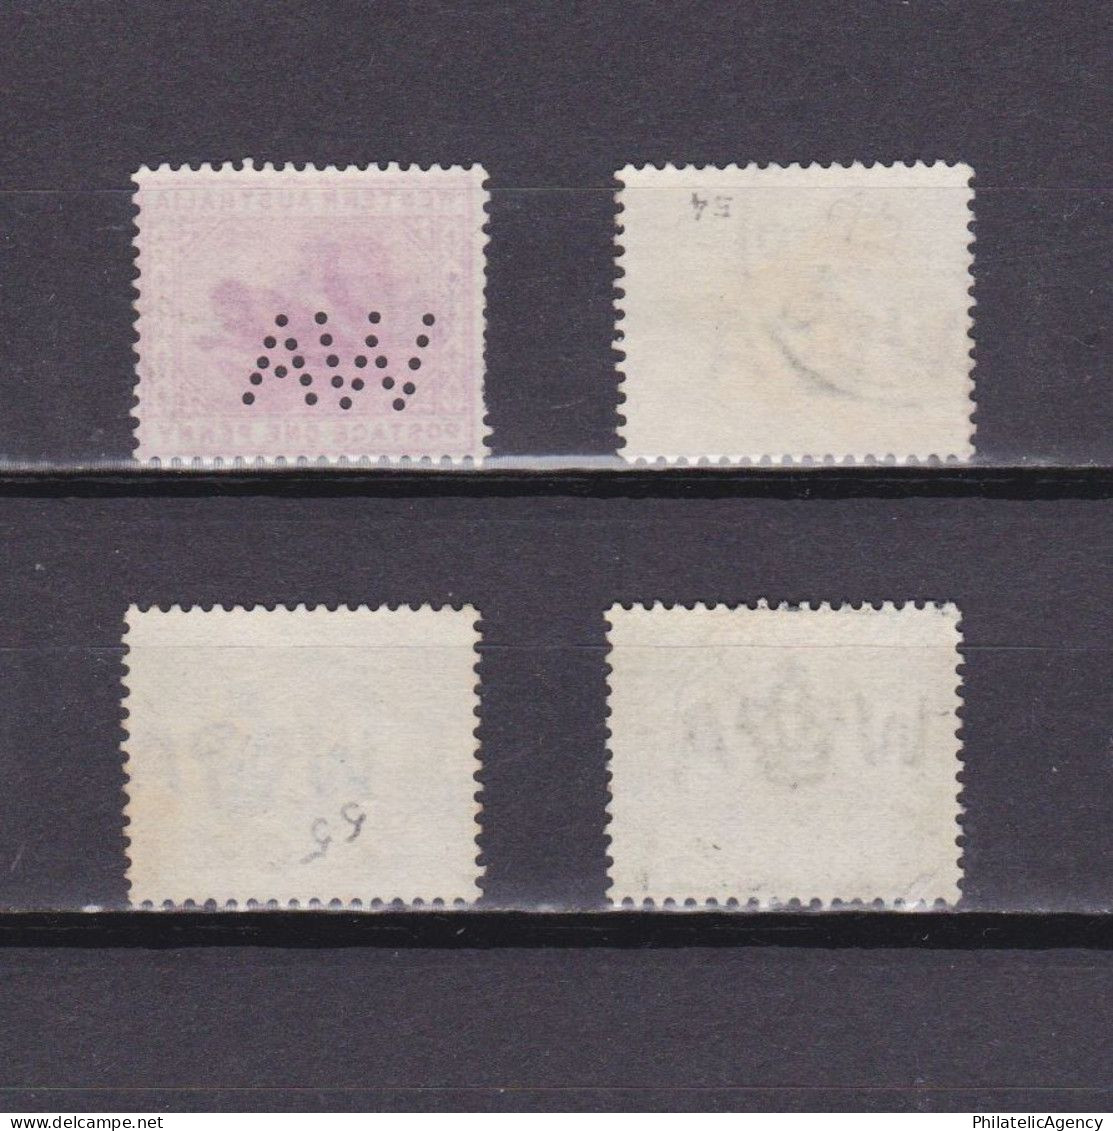 WESTERN AUSTRALIA 1898, SG# 112-116, Wmk W Crown A, Swan, Part Set, Used - Used Stamps